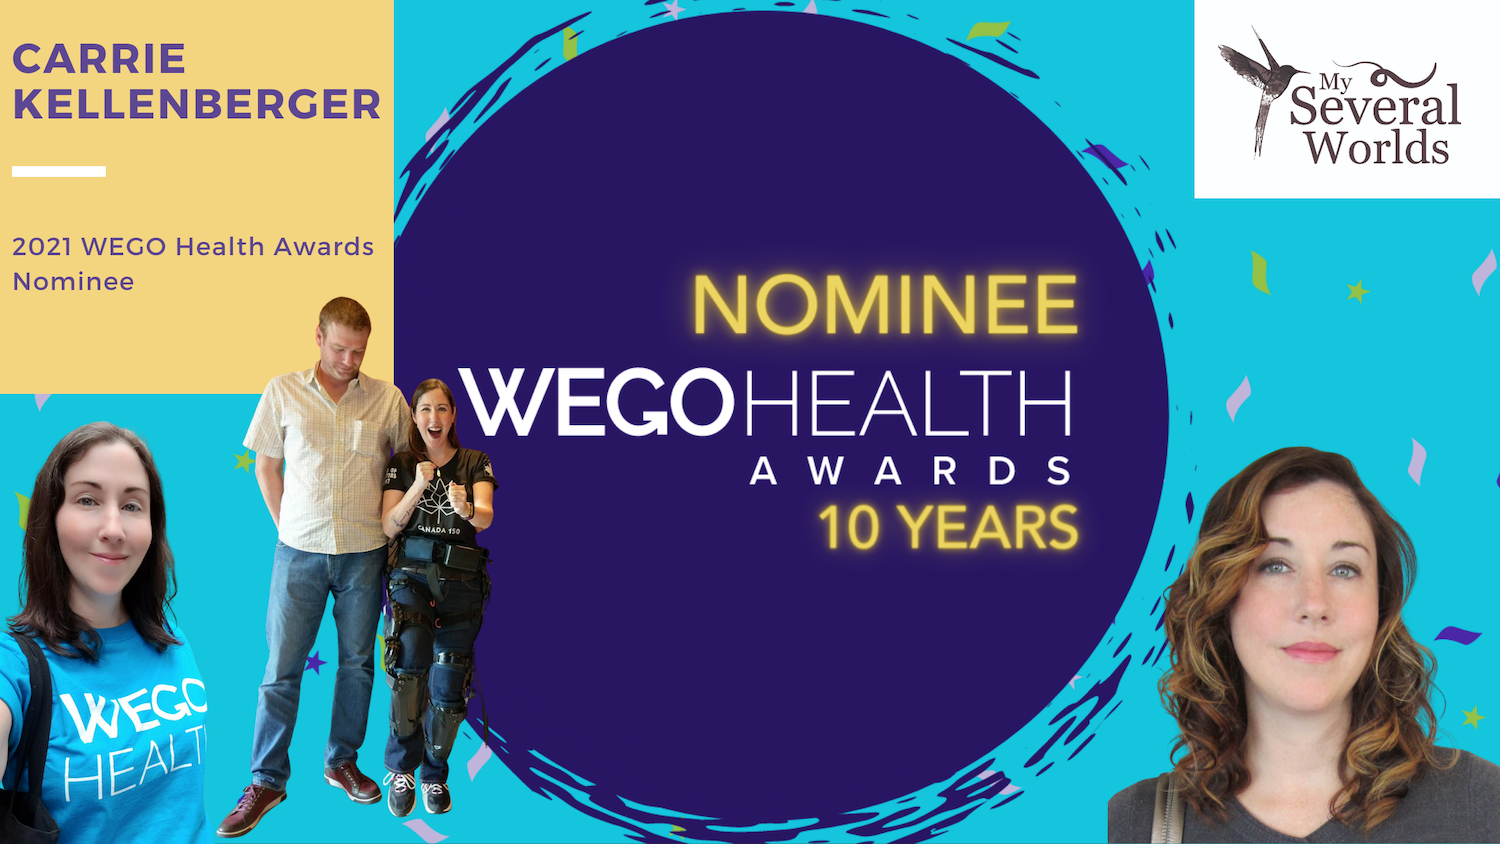 WEGO HEALTH AWARDS Nominee Carrie Kellenberger